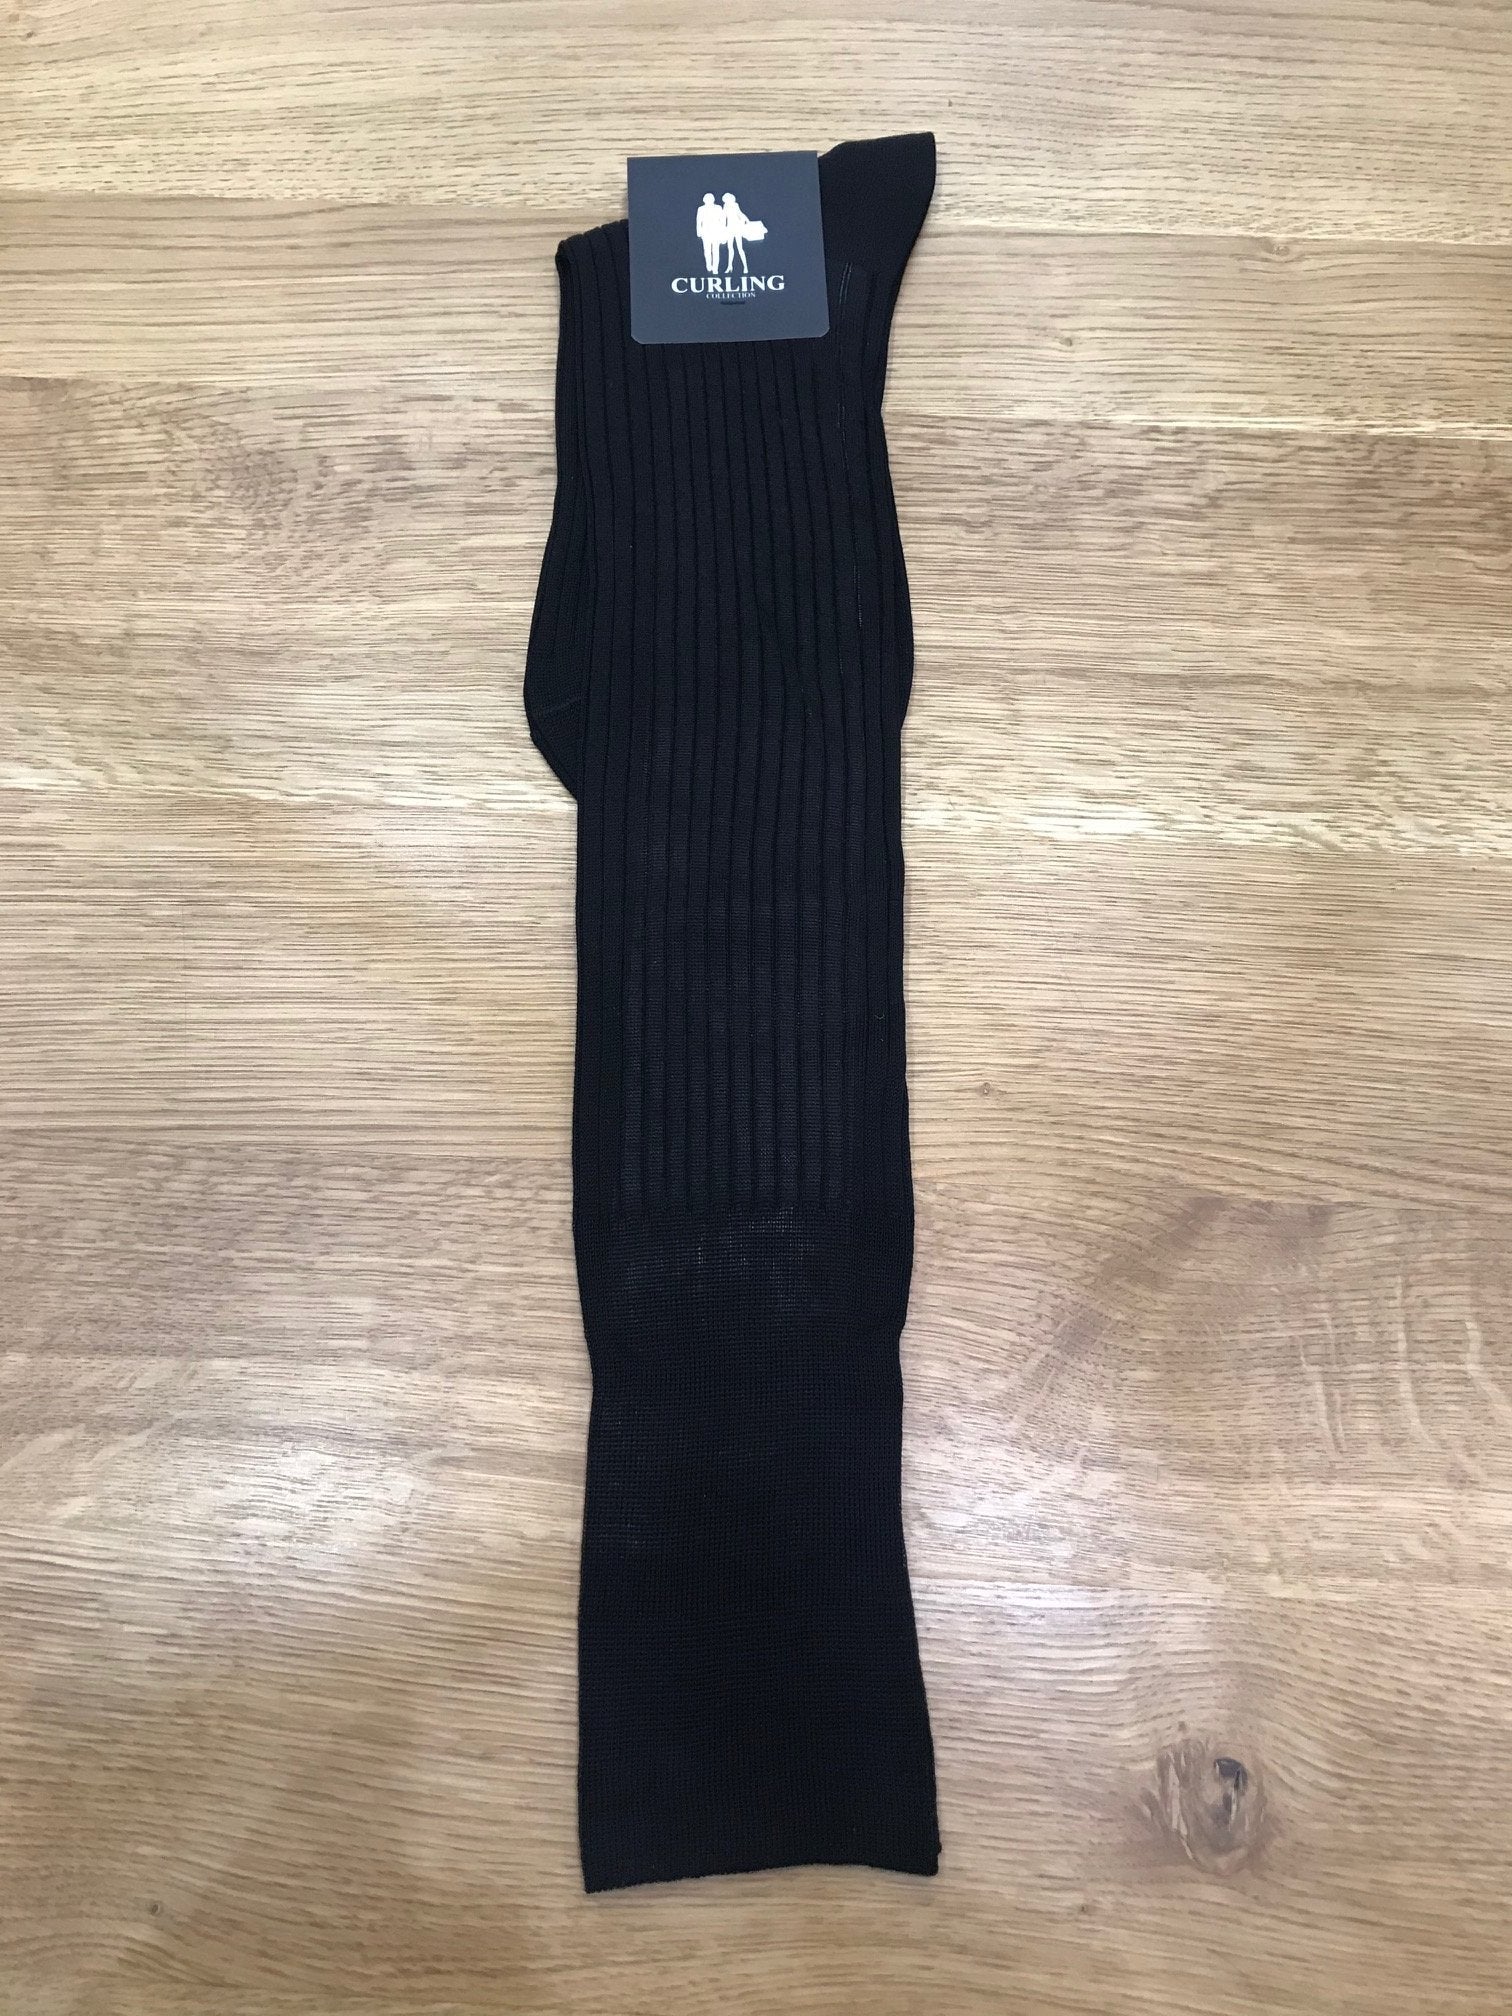 Calcetines altos para hombre de algodón mercerizado negro de hilo de Escocia